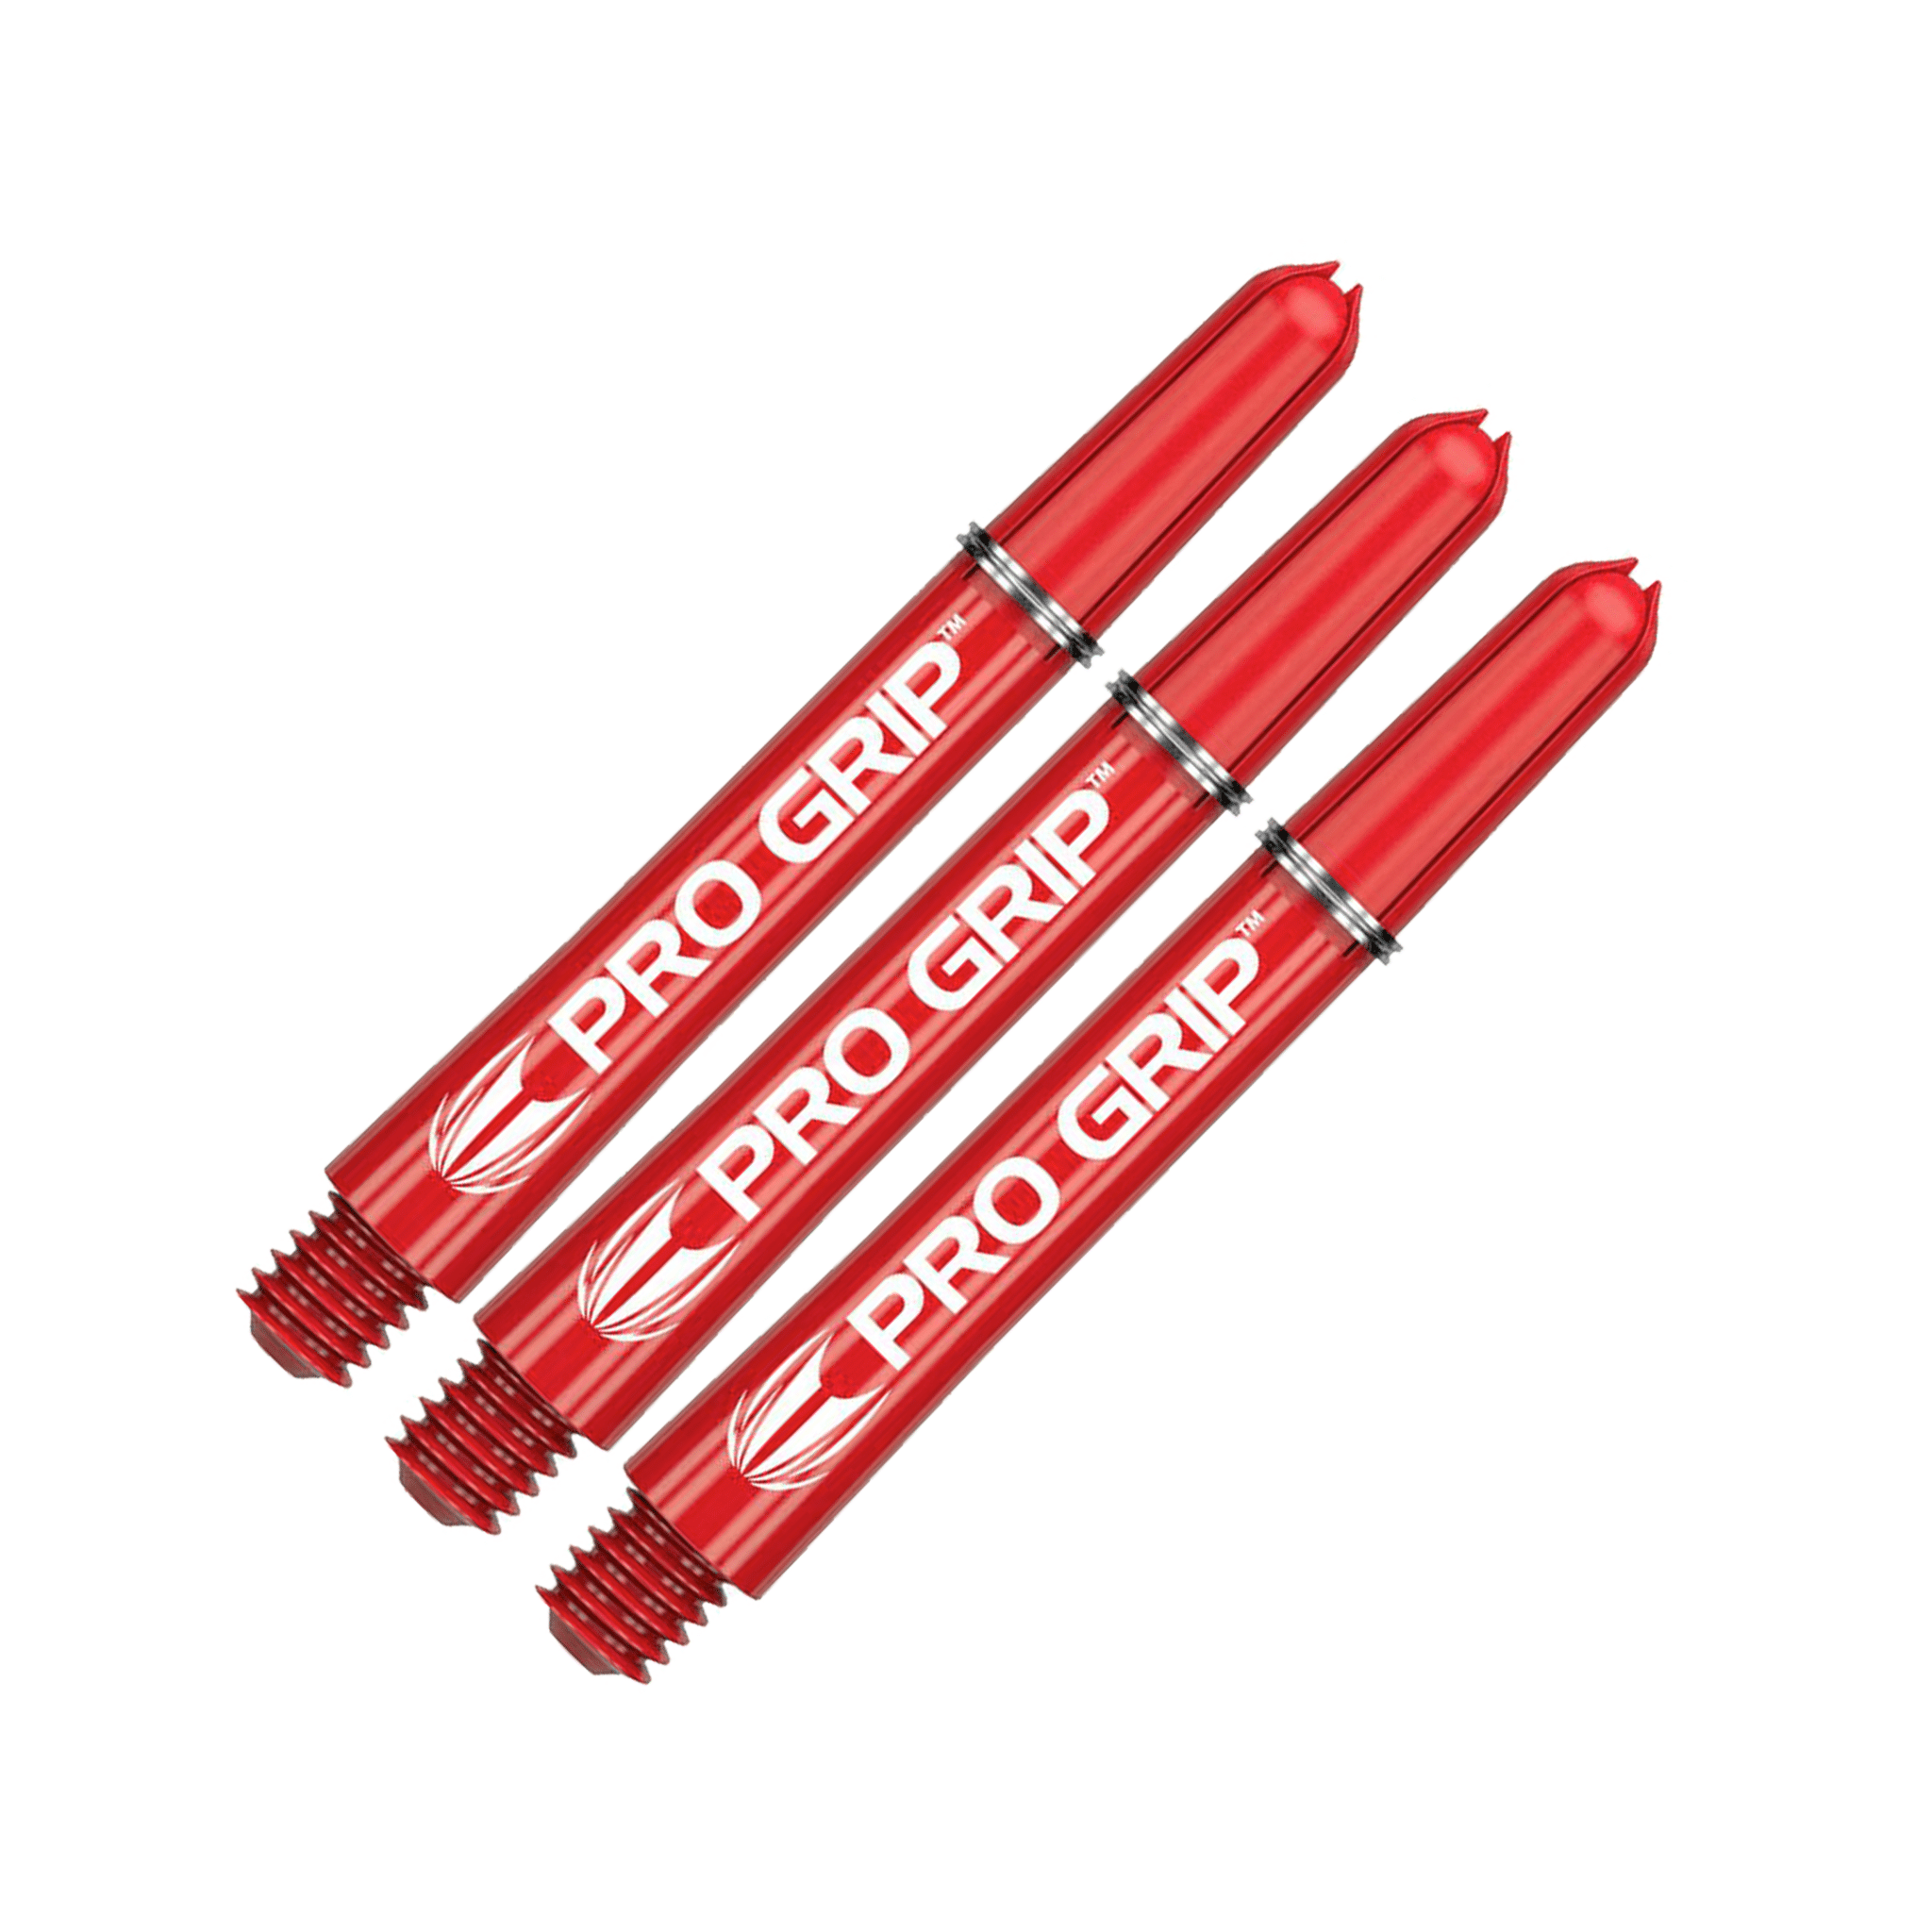 Target Pro Grip - Nylon Dart Shafts Red / Intermediate (41mm) Shafts